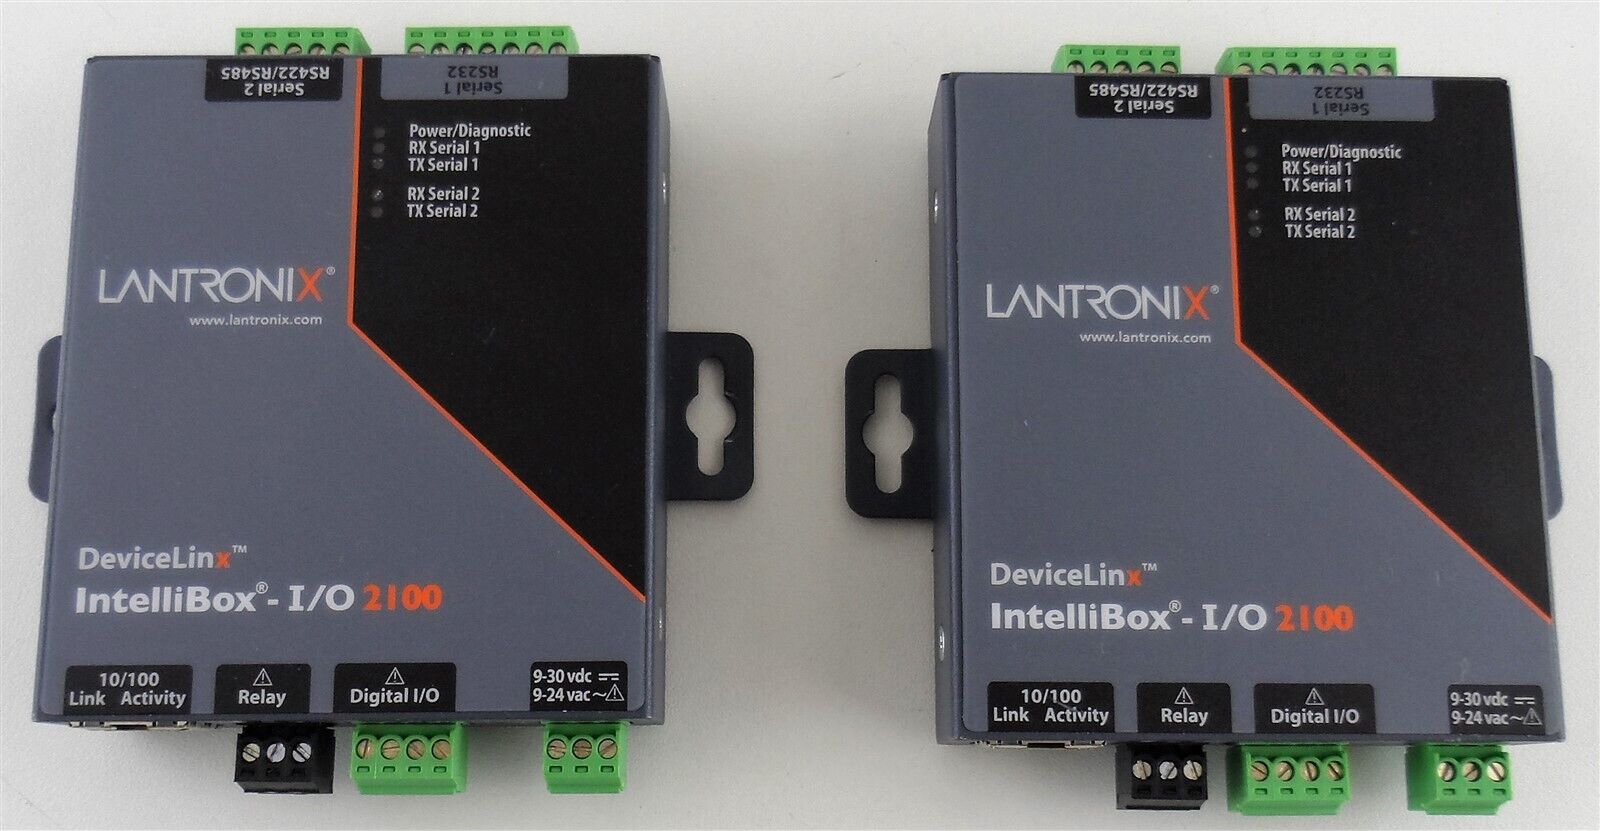 Lot of 2 Lantronix DeviceLinx IntelliBox-I/O 2100 (310-589-R) Controllers Used